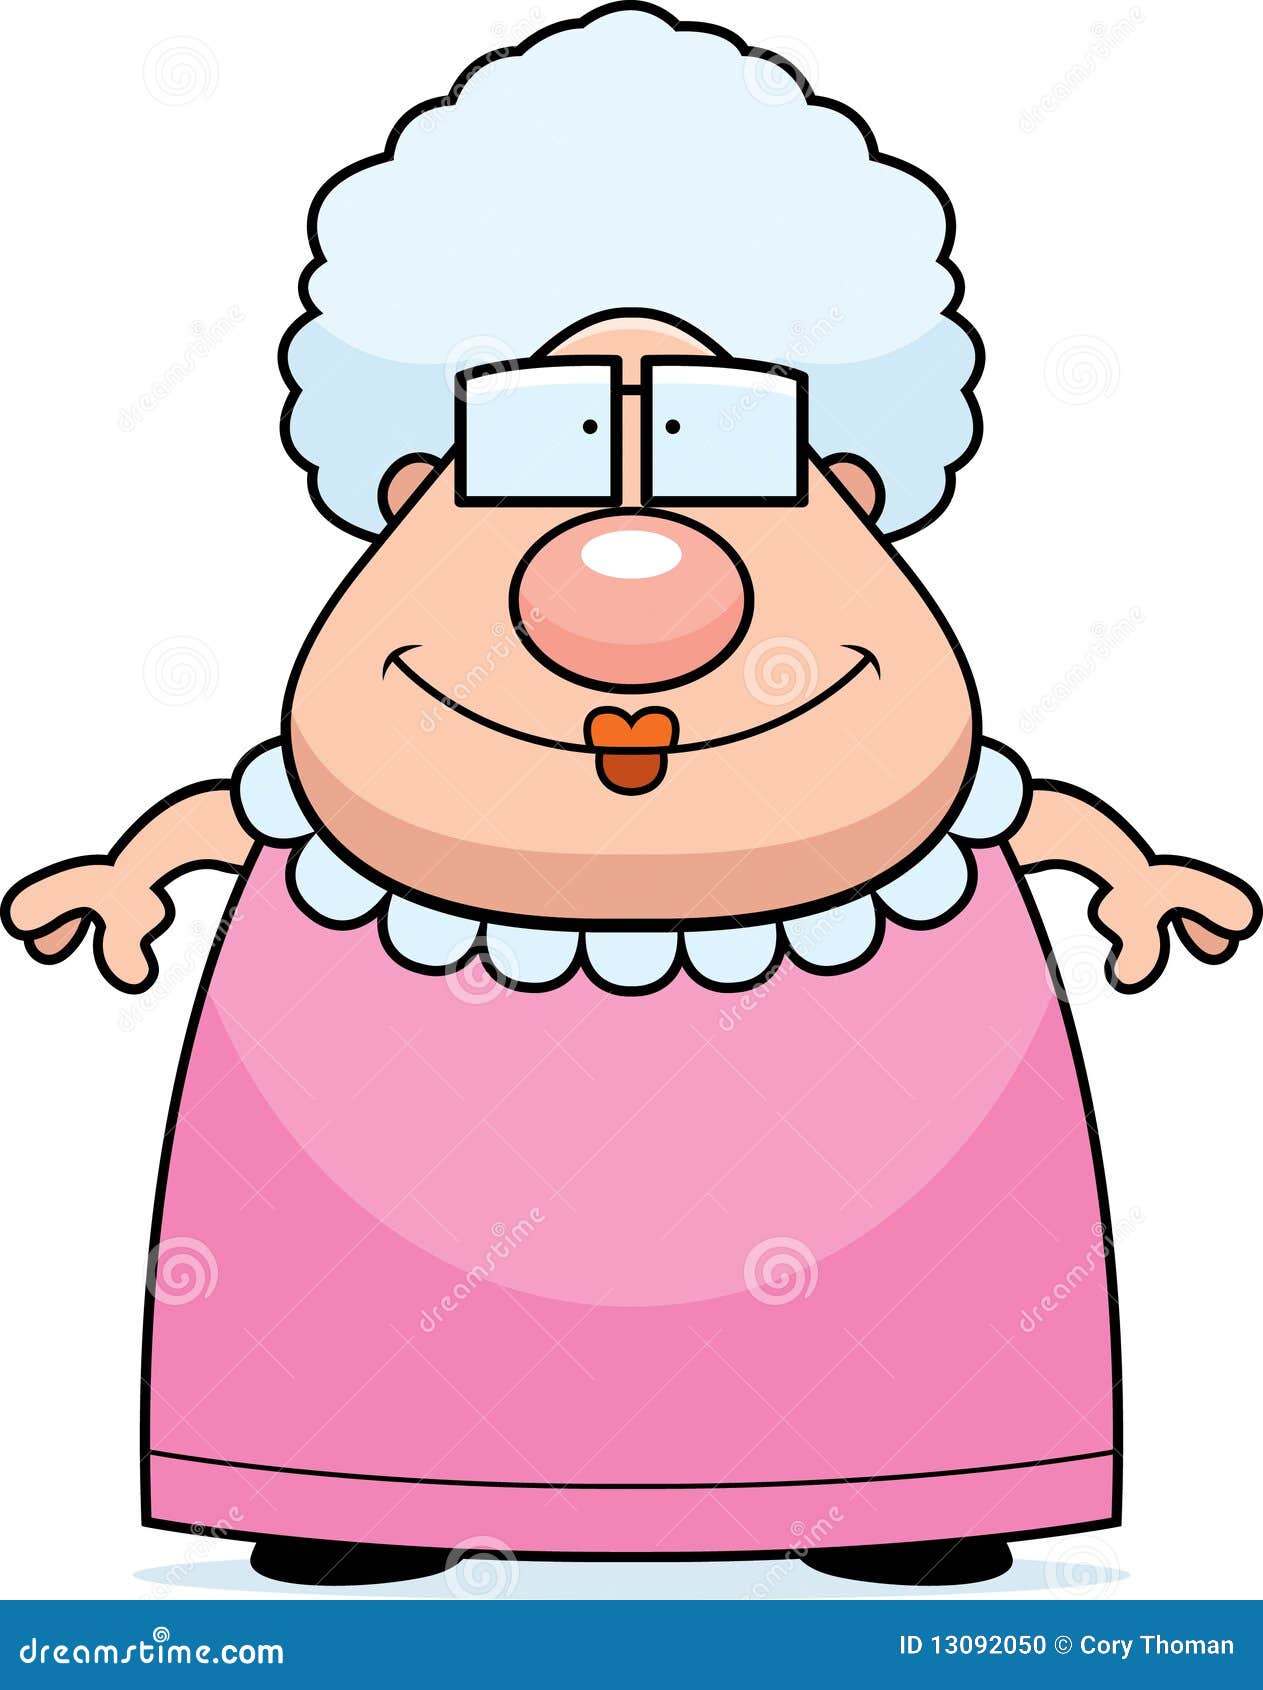 Grandma Smiling stock vector. Illustration of standing - 13092050